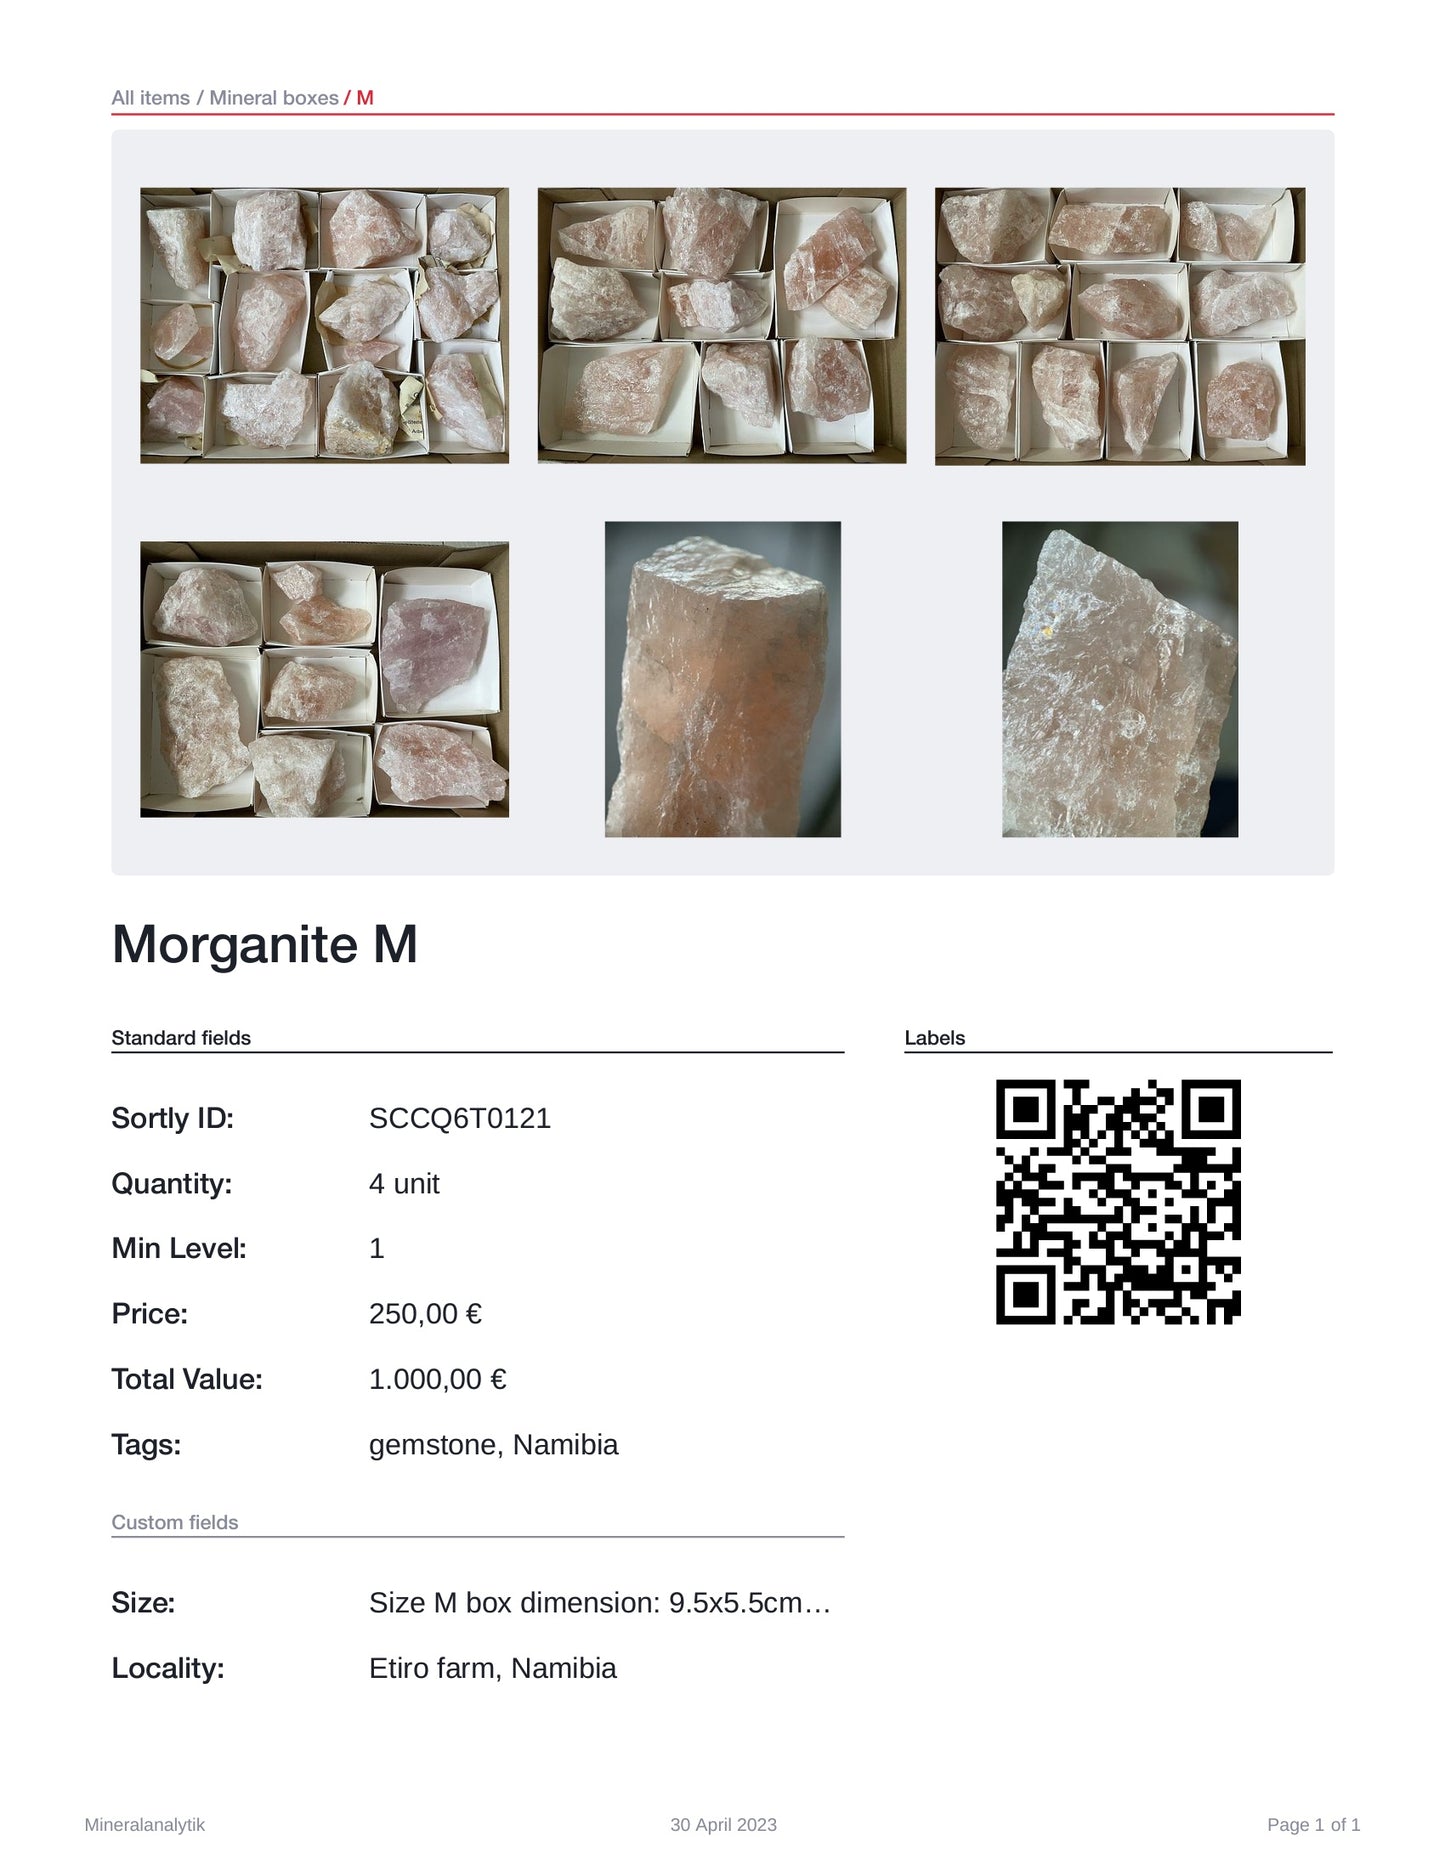 Morganite M-size